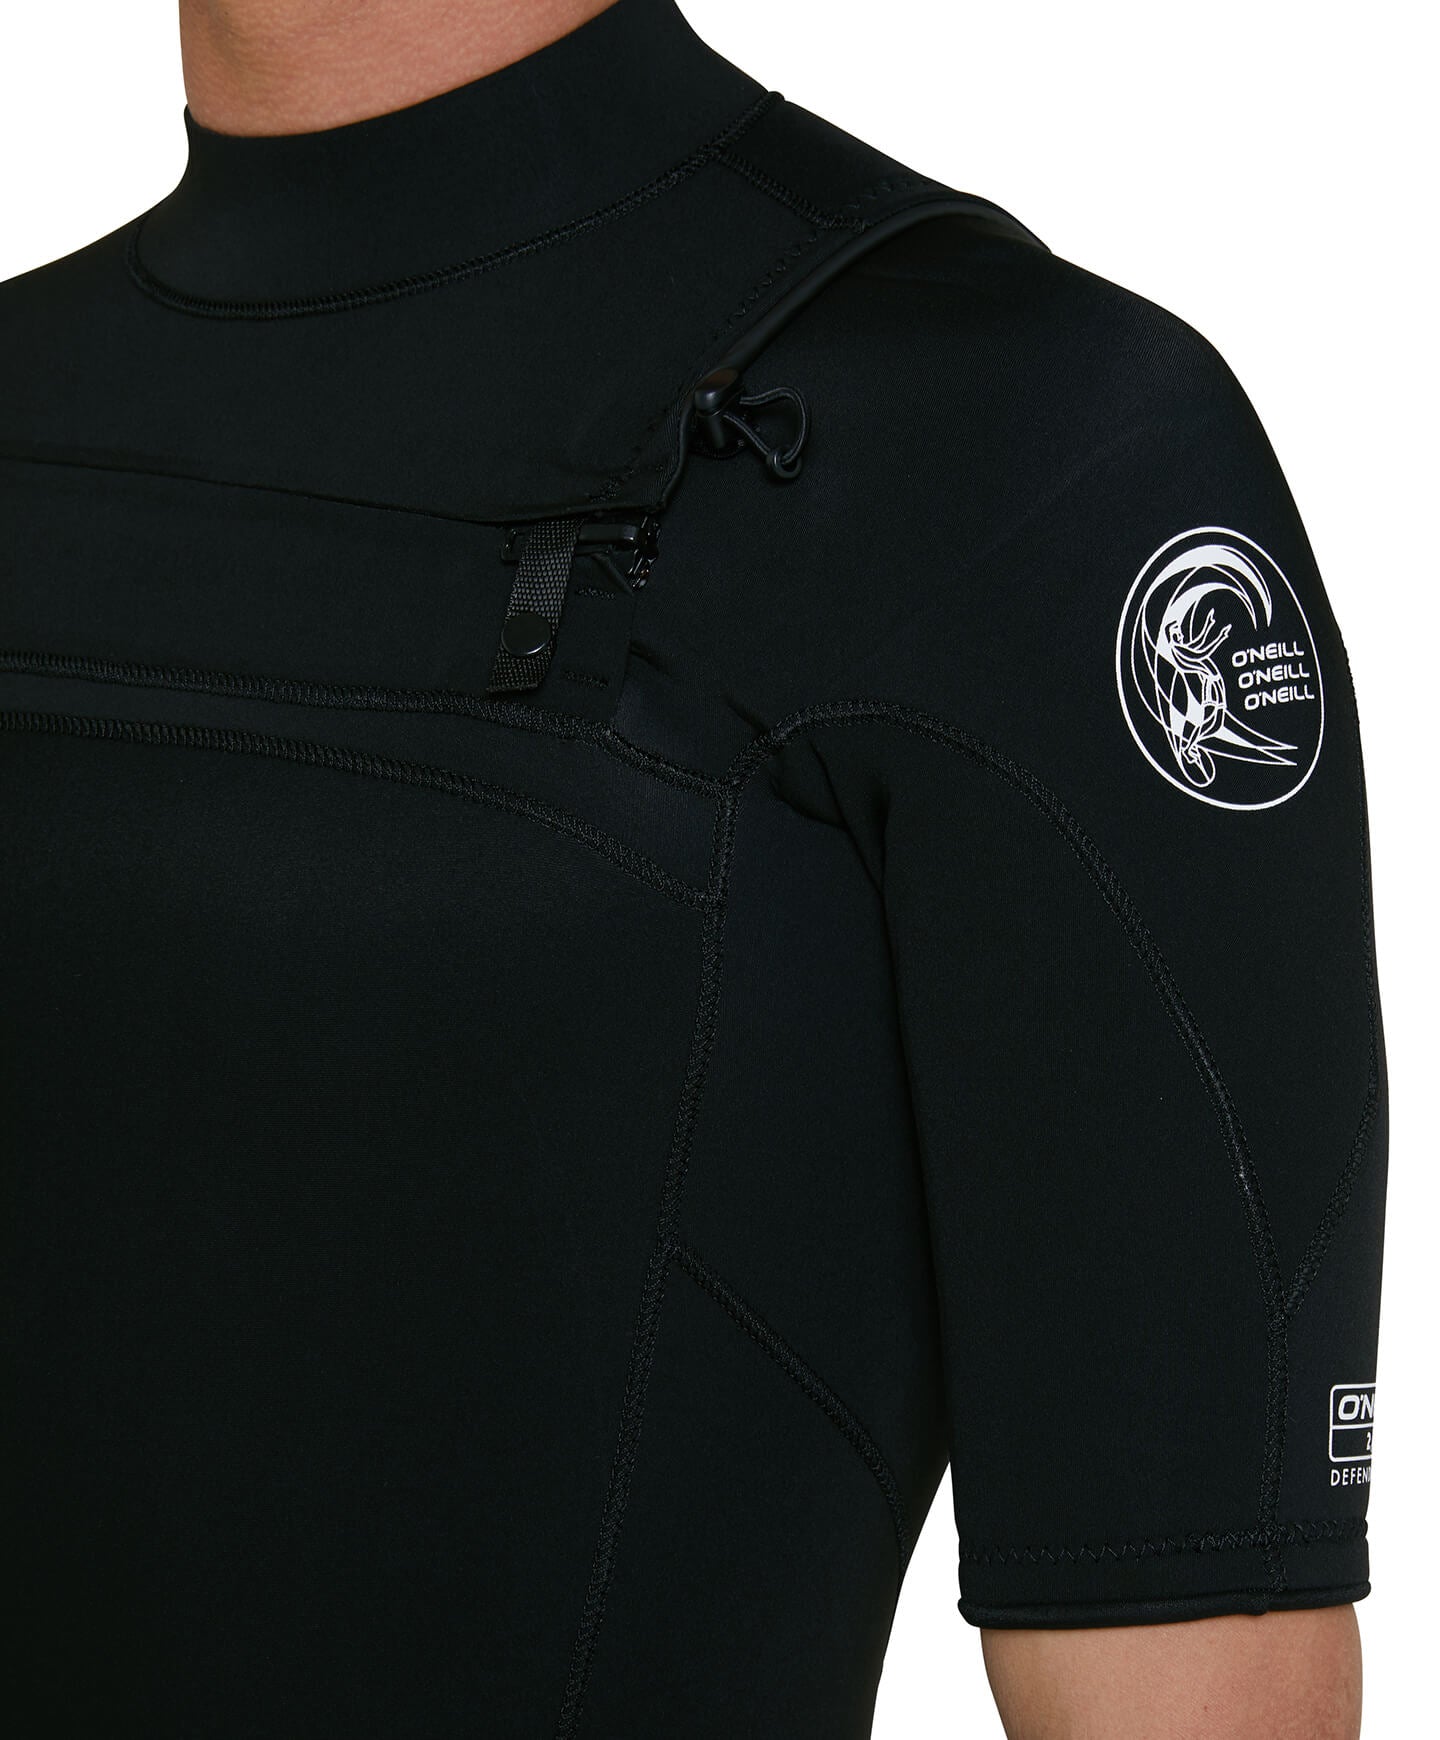 Defender 2mm Short Arm Steamer Chest Zip Wetsuit - Black